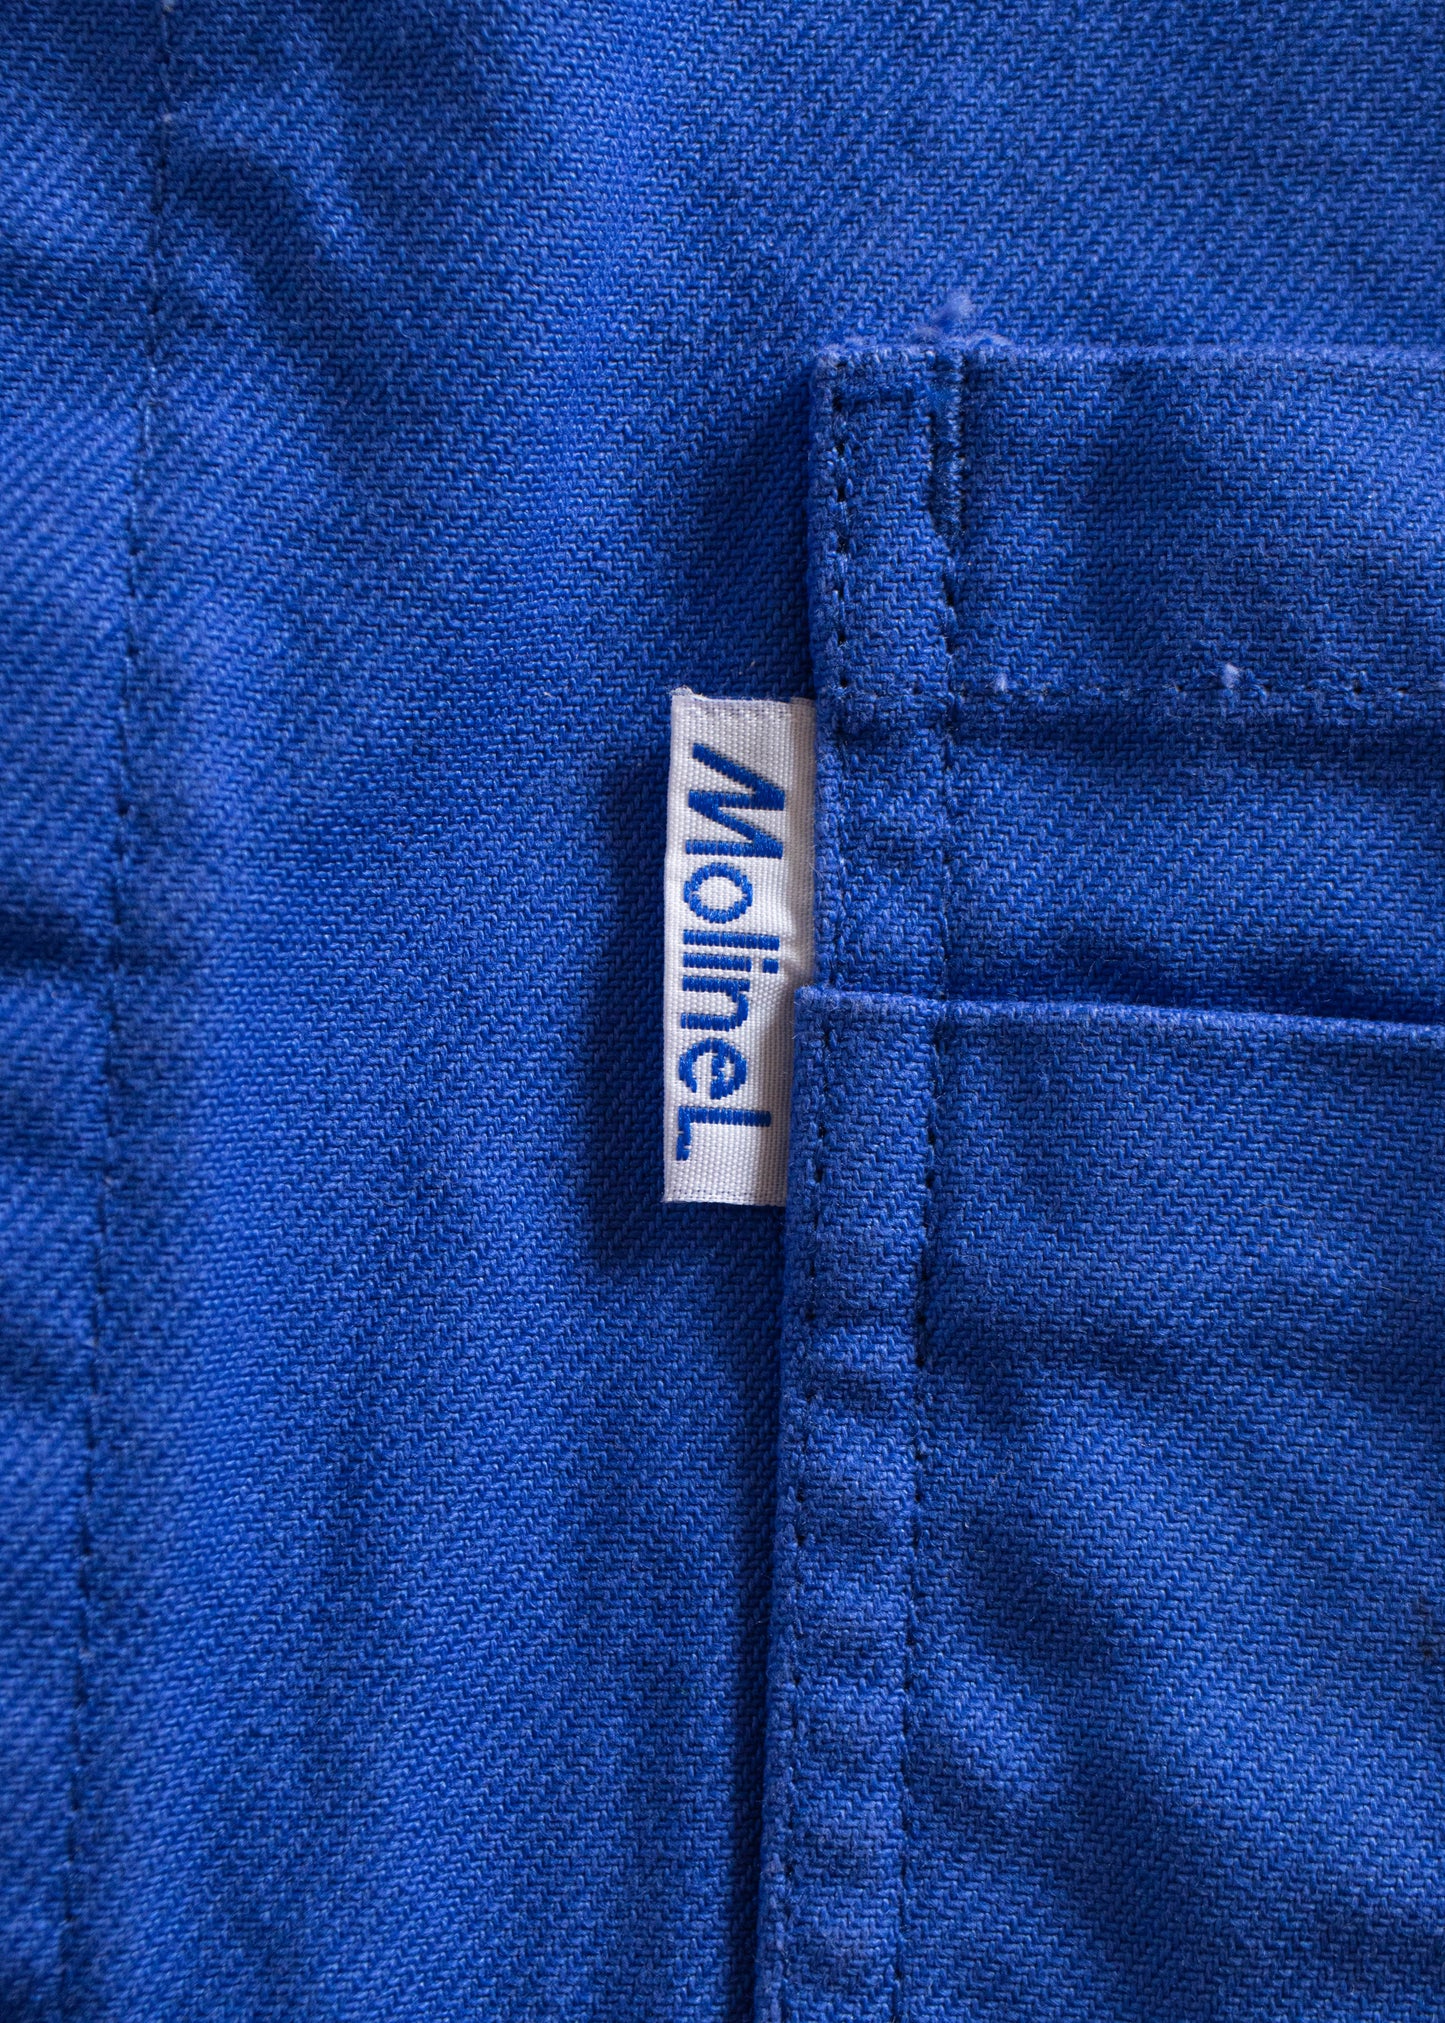 1980s Molinel French Workwear Chore Jacket Size M/L